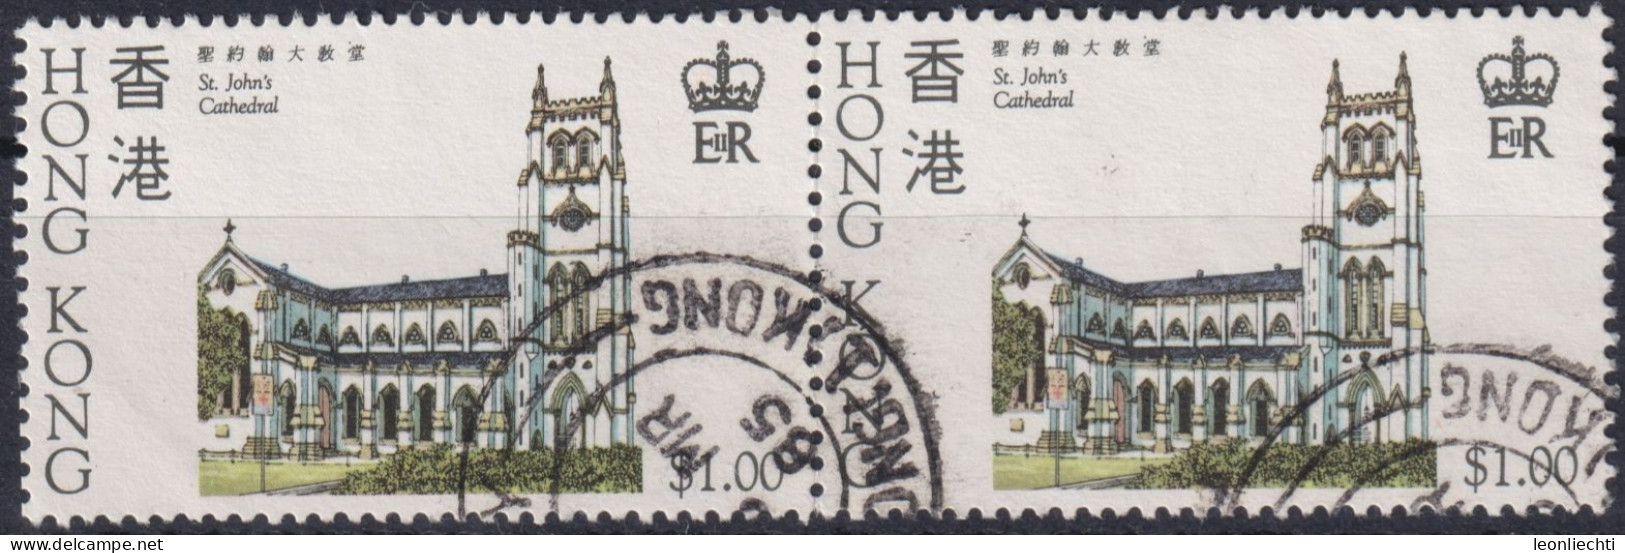 1985 Hong Kong (1997- ° Mi:HK 440, Sn:HK 440, Yt:HK 434,St. John’s Cathedral, Historical Buildings Of Hong Kong - Used Stamps